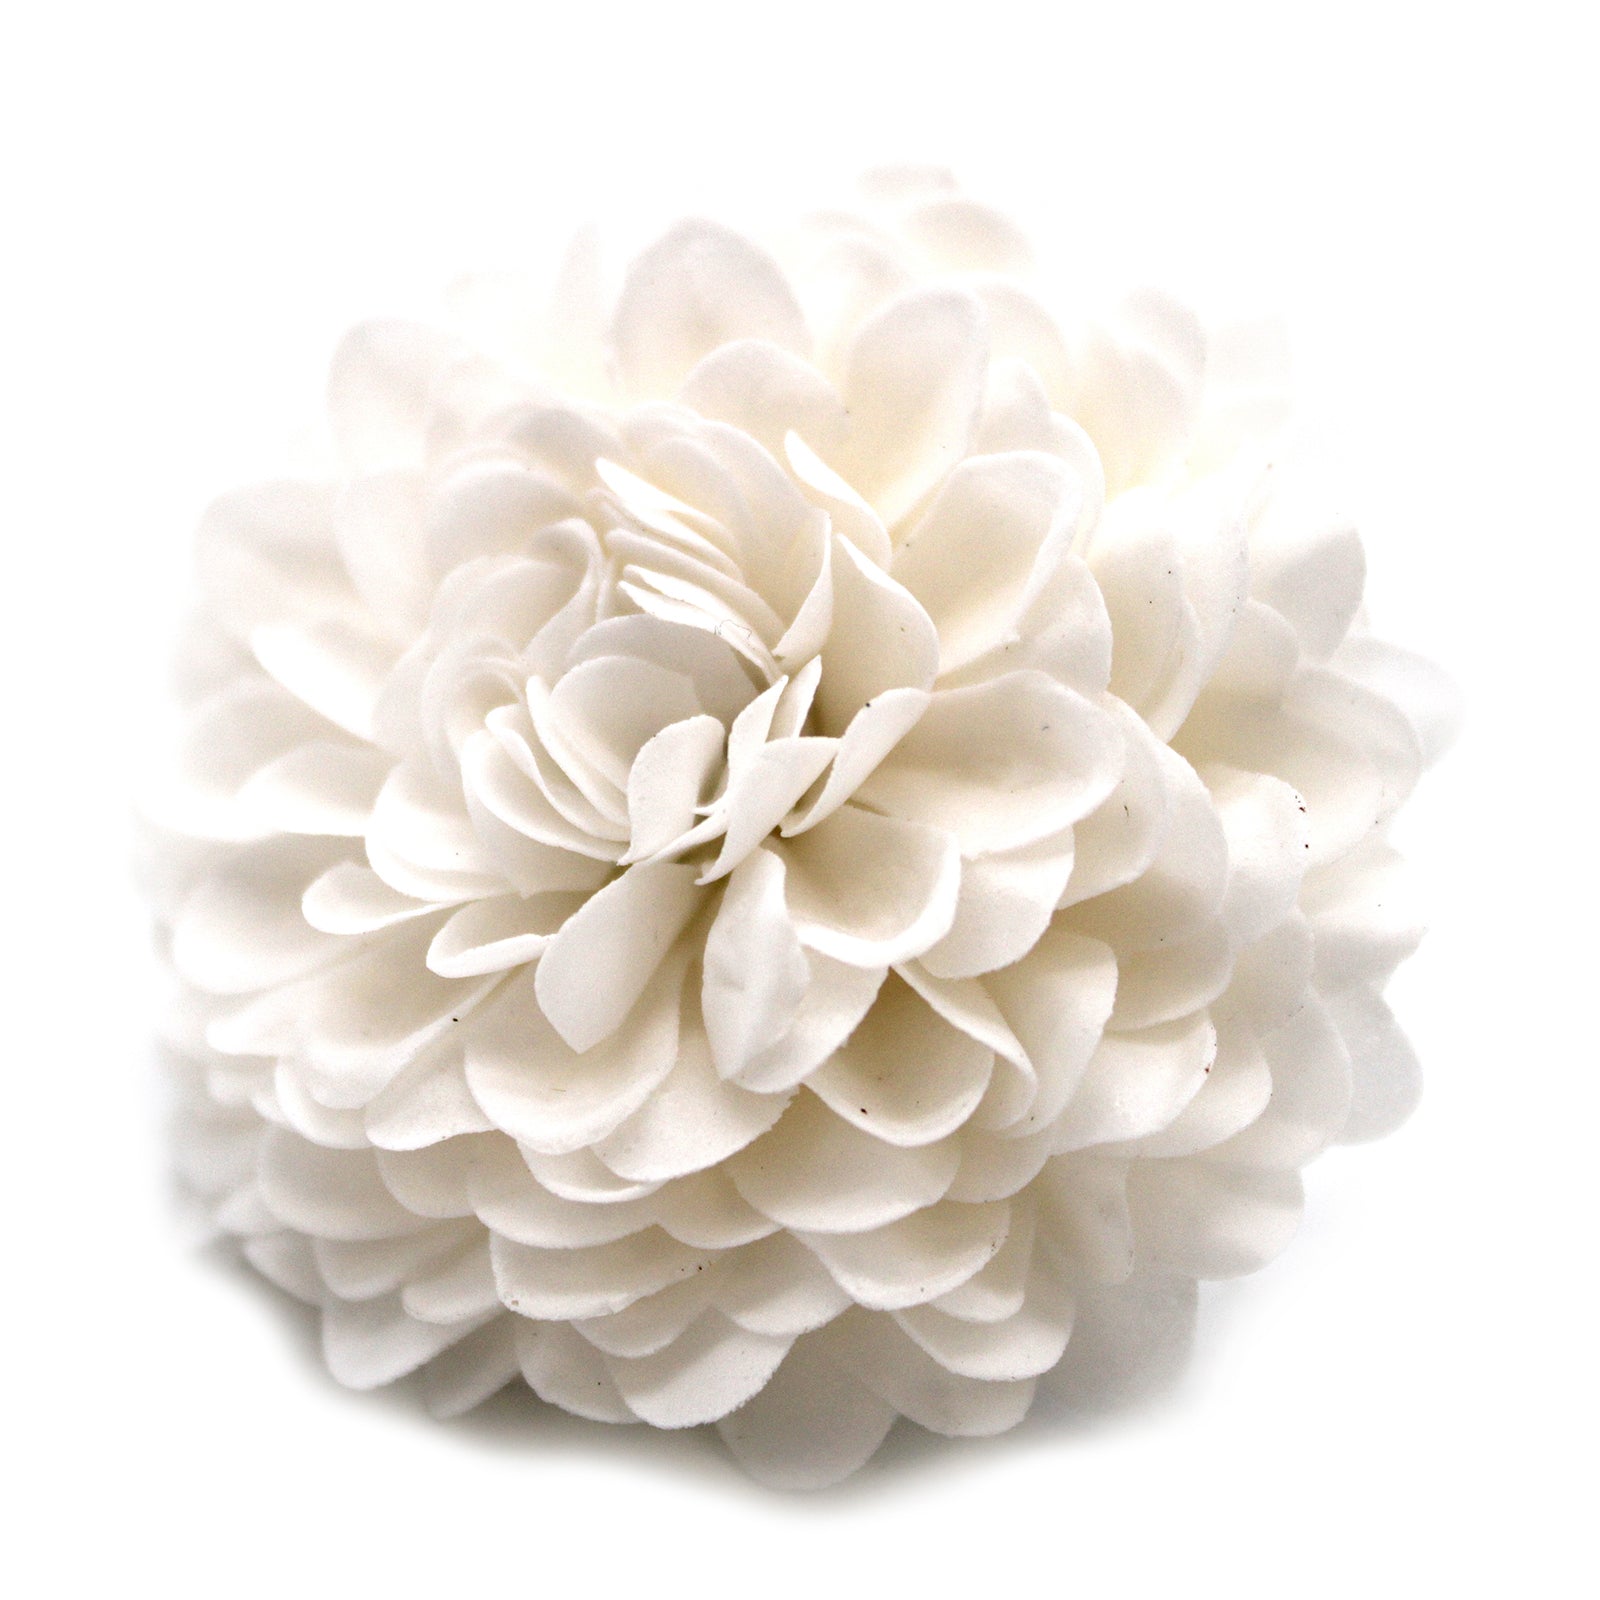 View Craft Soap Flower Small Chrysanthemum White information